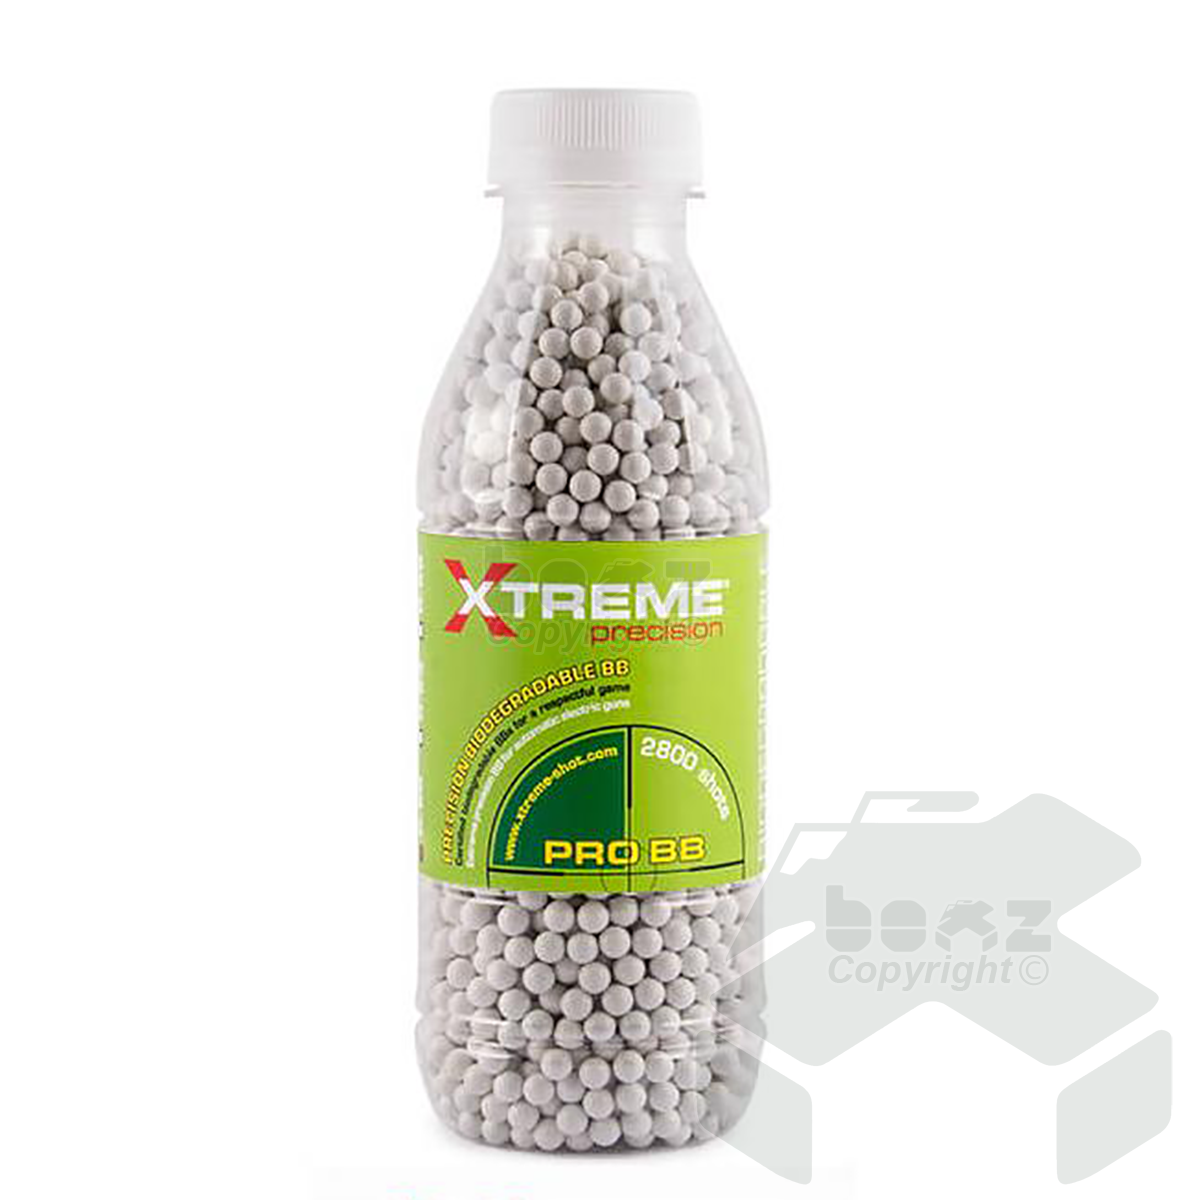 Xtreme Precision 0.28g Bio BBs White 2800 bottle